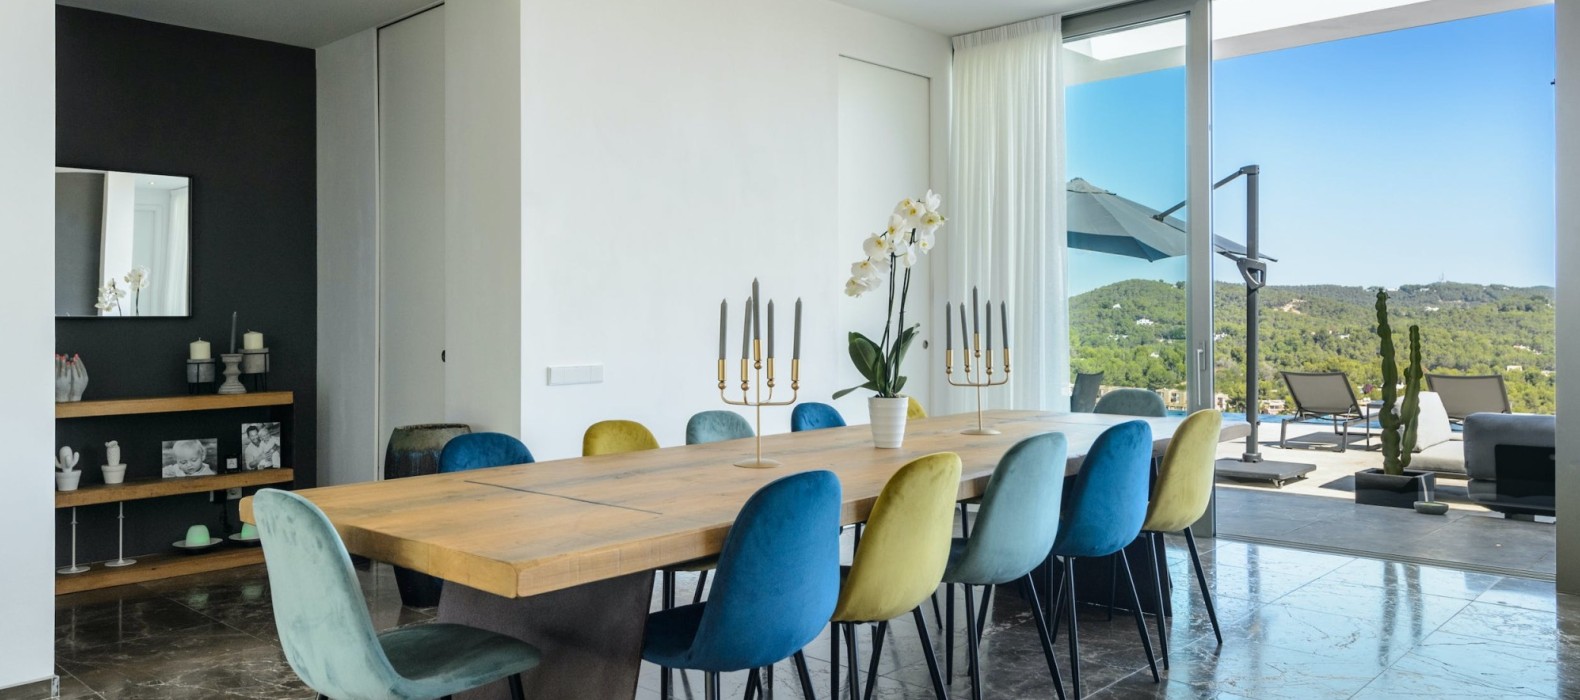 Dining room of Villa Roca Indigo in Ibiza